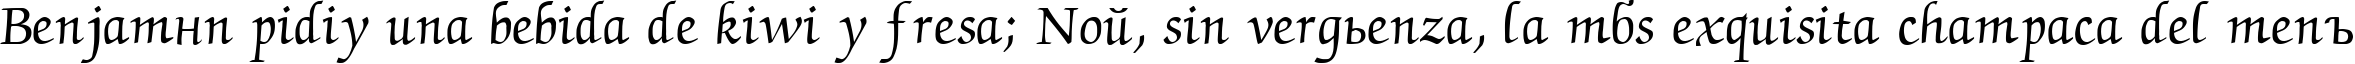 Пример написания шрифтом CyrillicChancellor текста на испанском